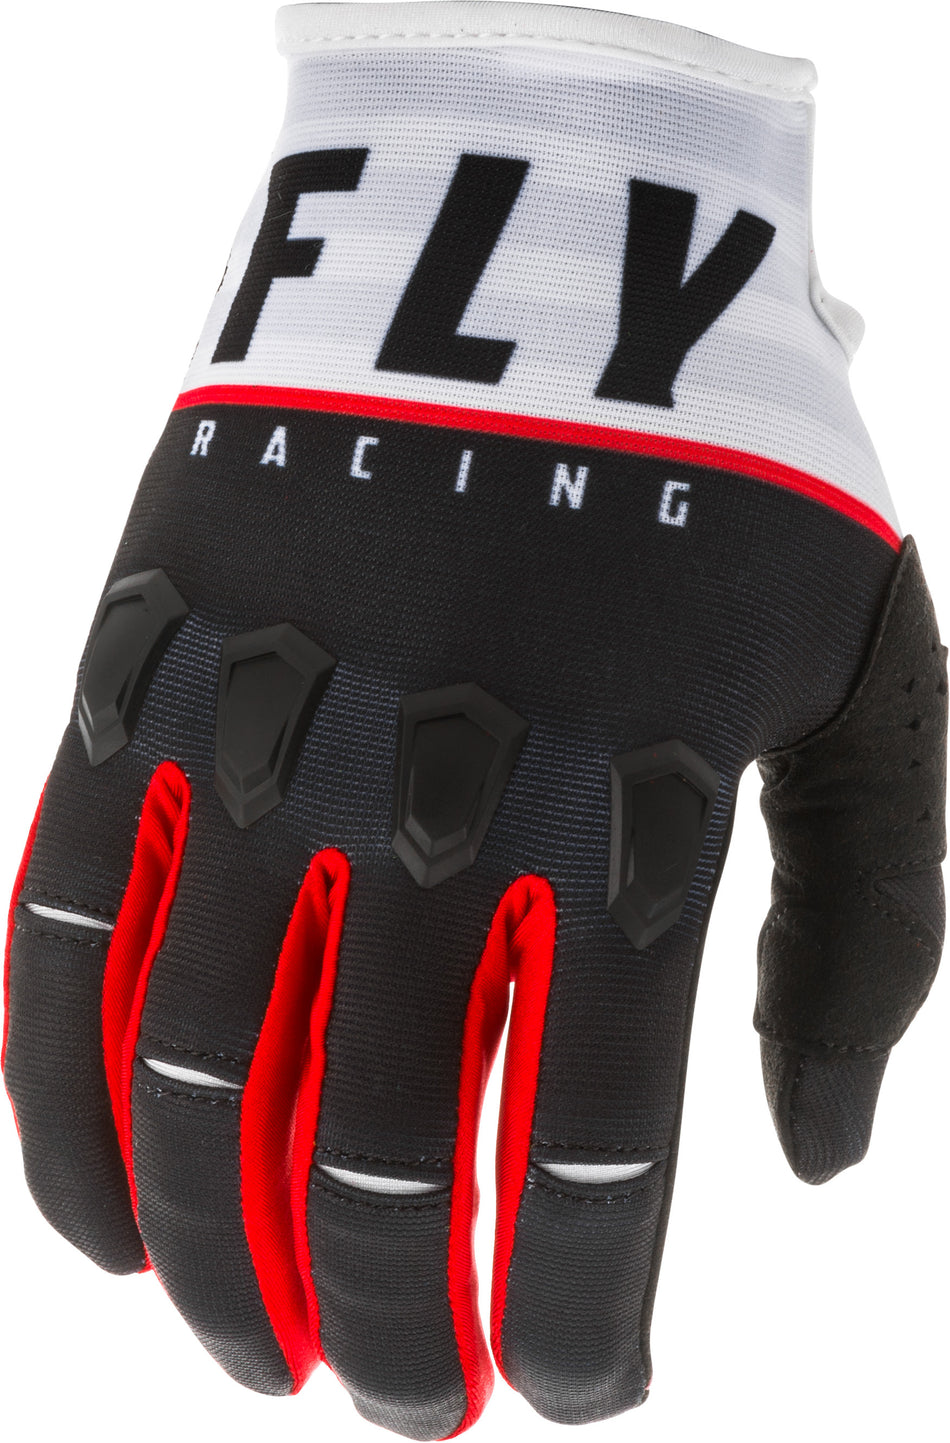 FLY RACING Kinetic K120 Gloves Black/White/Red Sz 04 373-41304